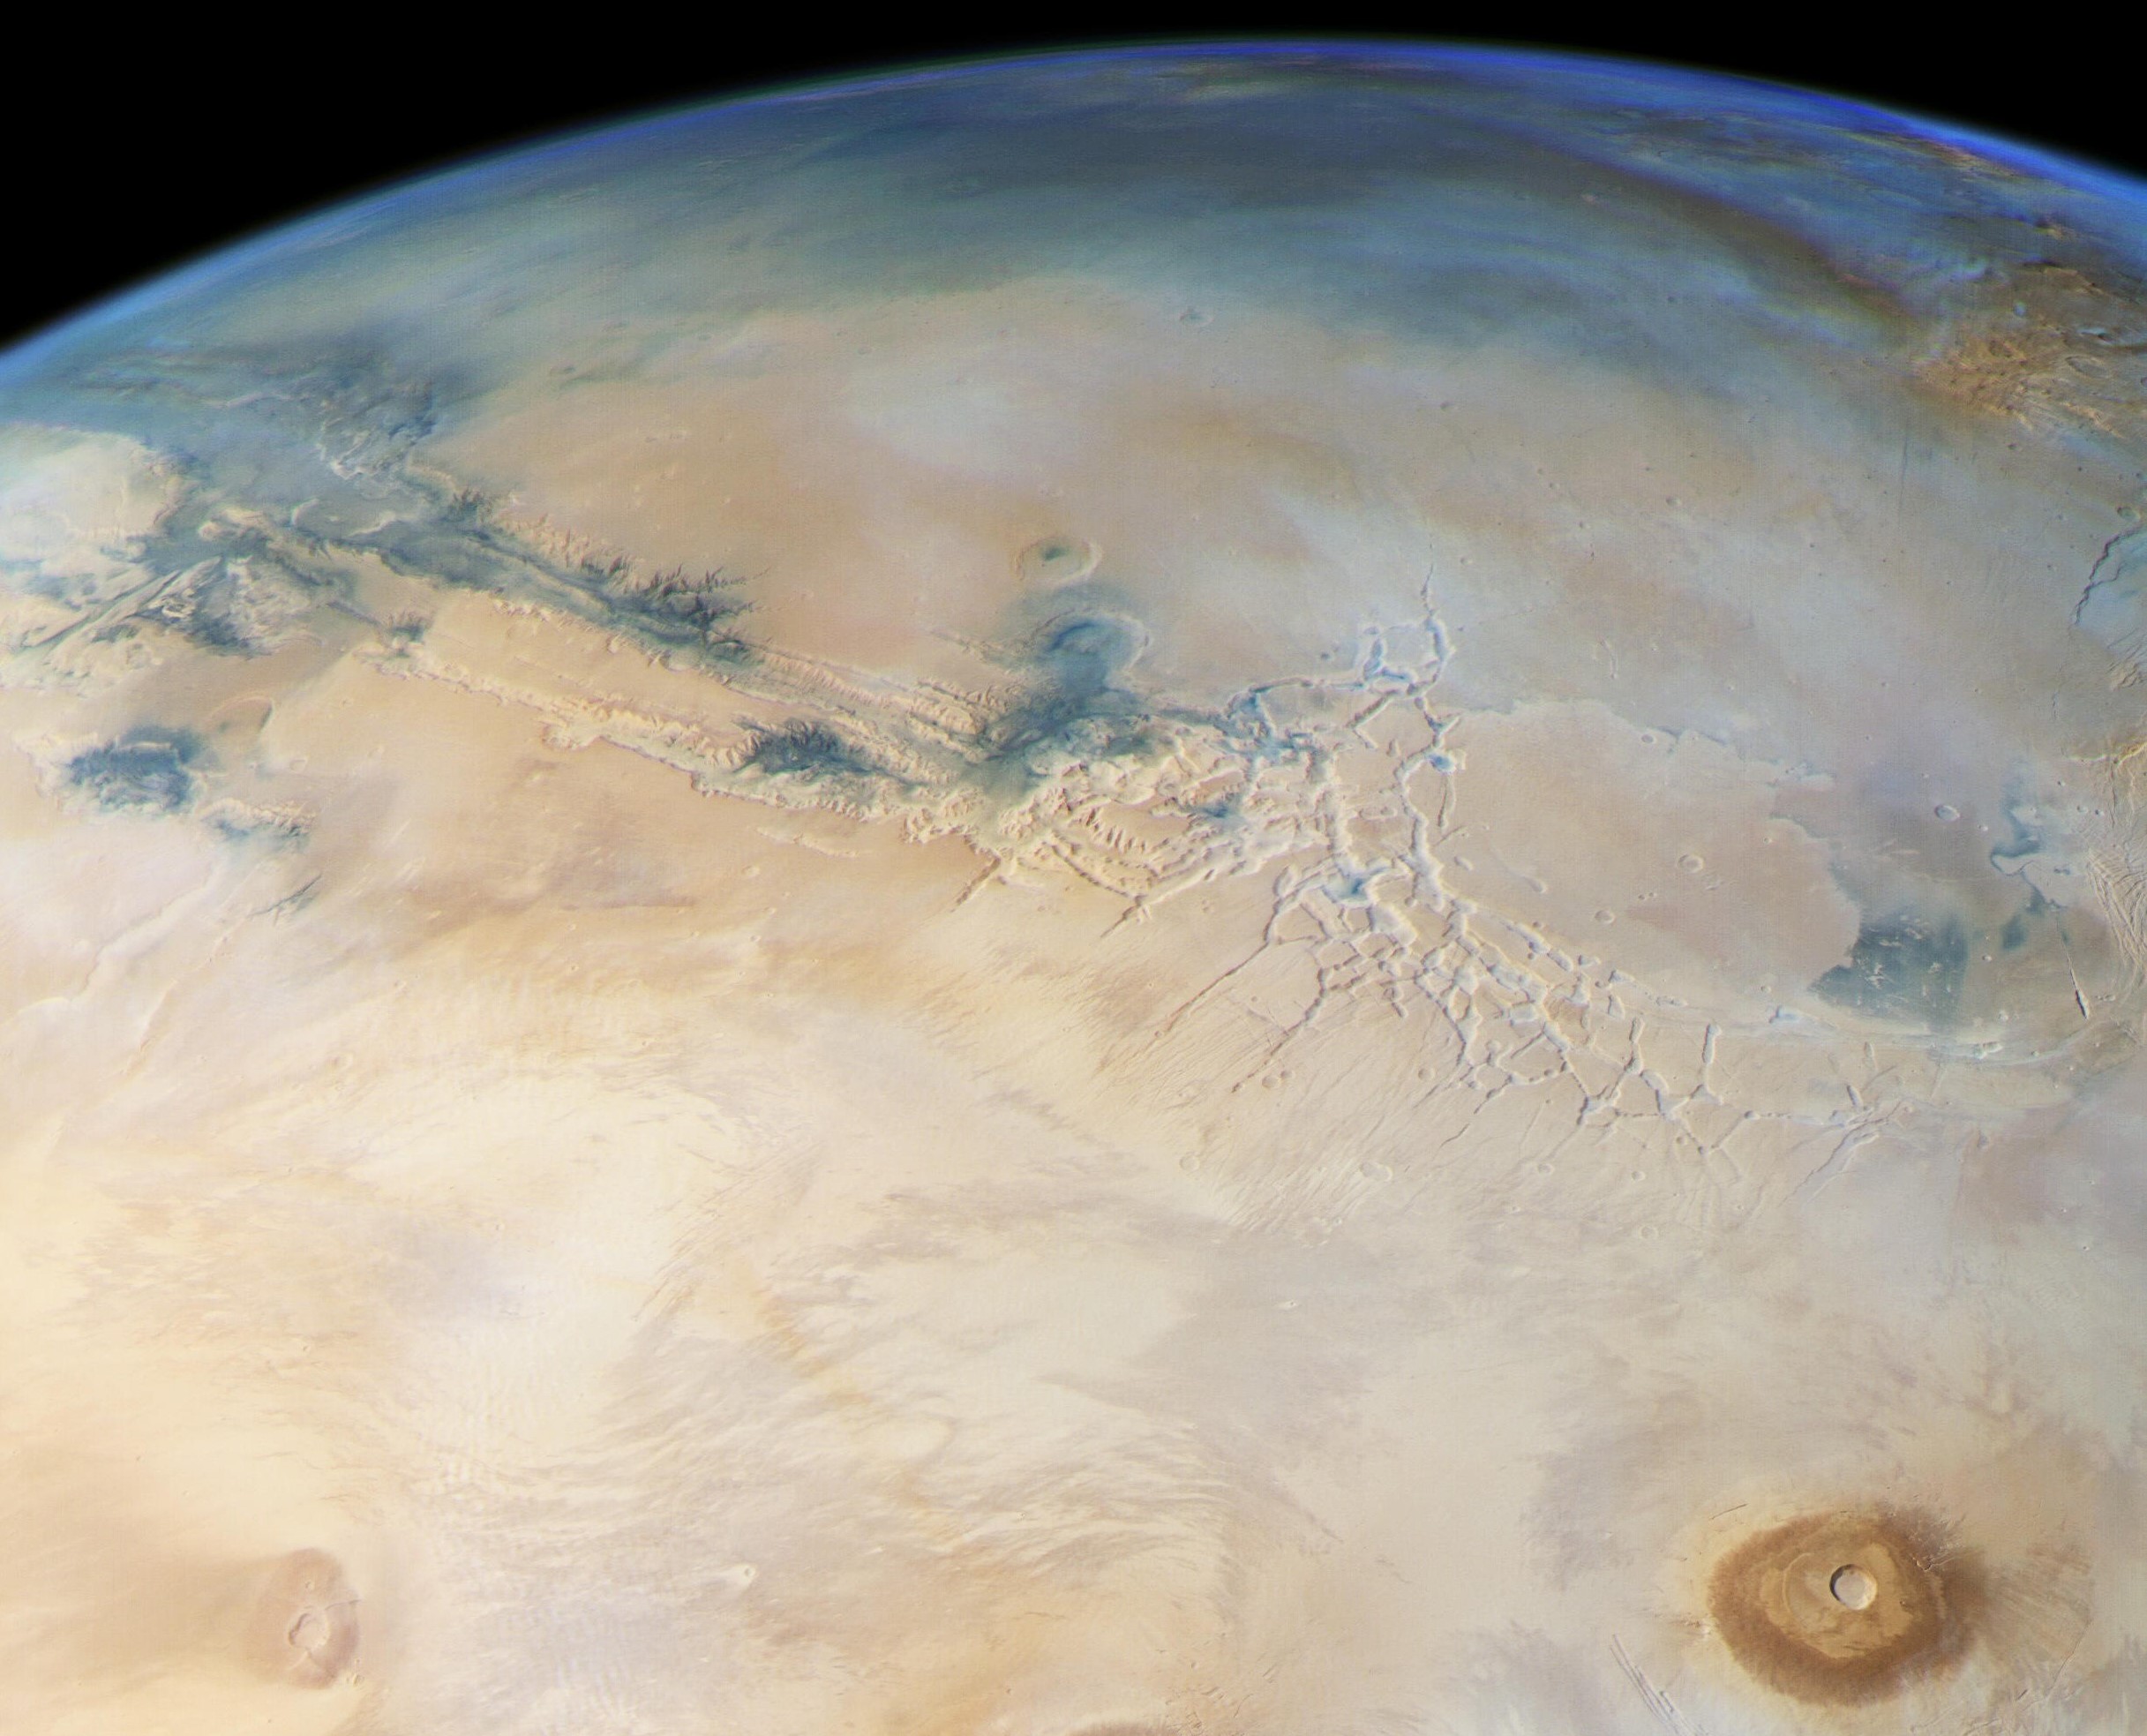 Southern Highlands on Mars (Tharsis Montes, Valles Marineris) - Source: ESA, DLR, FU Berlin